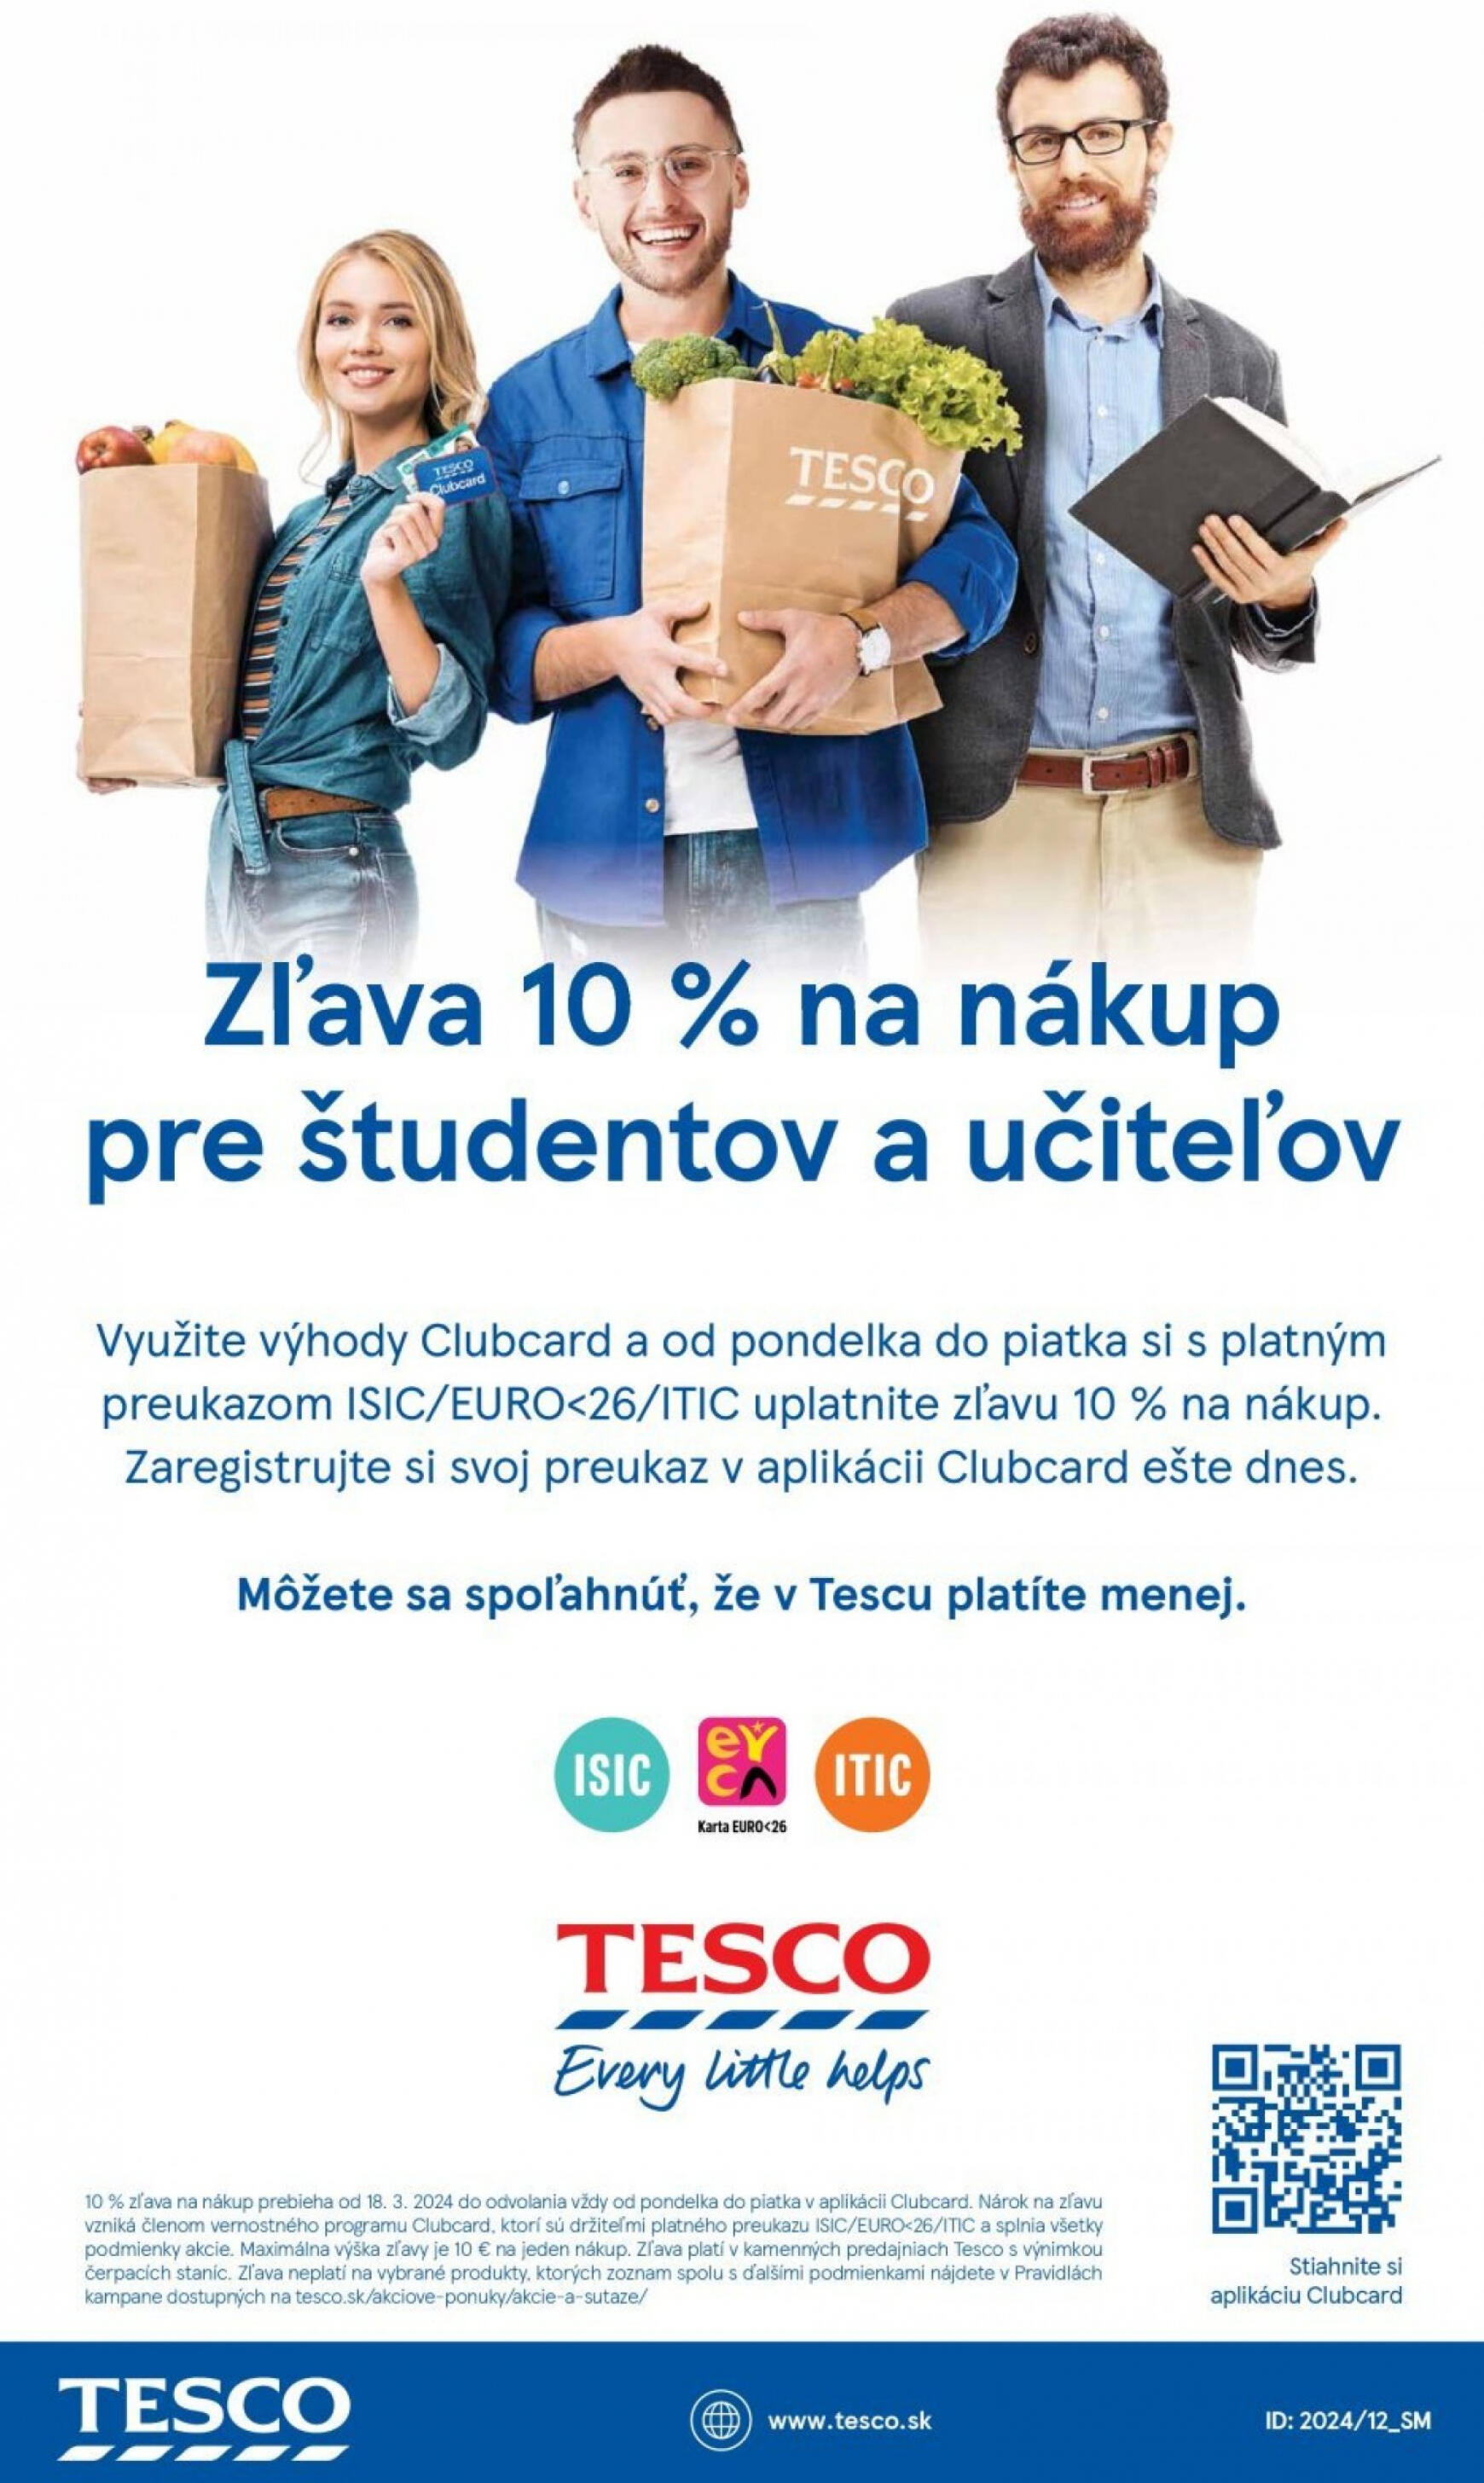 tesco - Tesco supermarket leták platný od 15.05. - 21.05. - page: 26